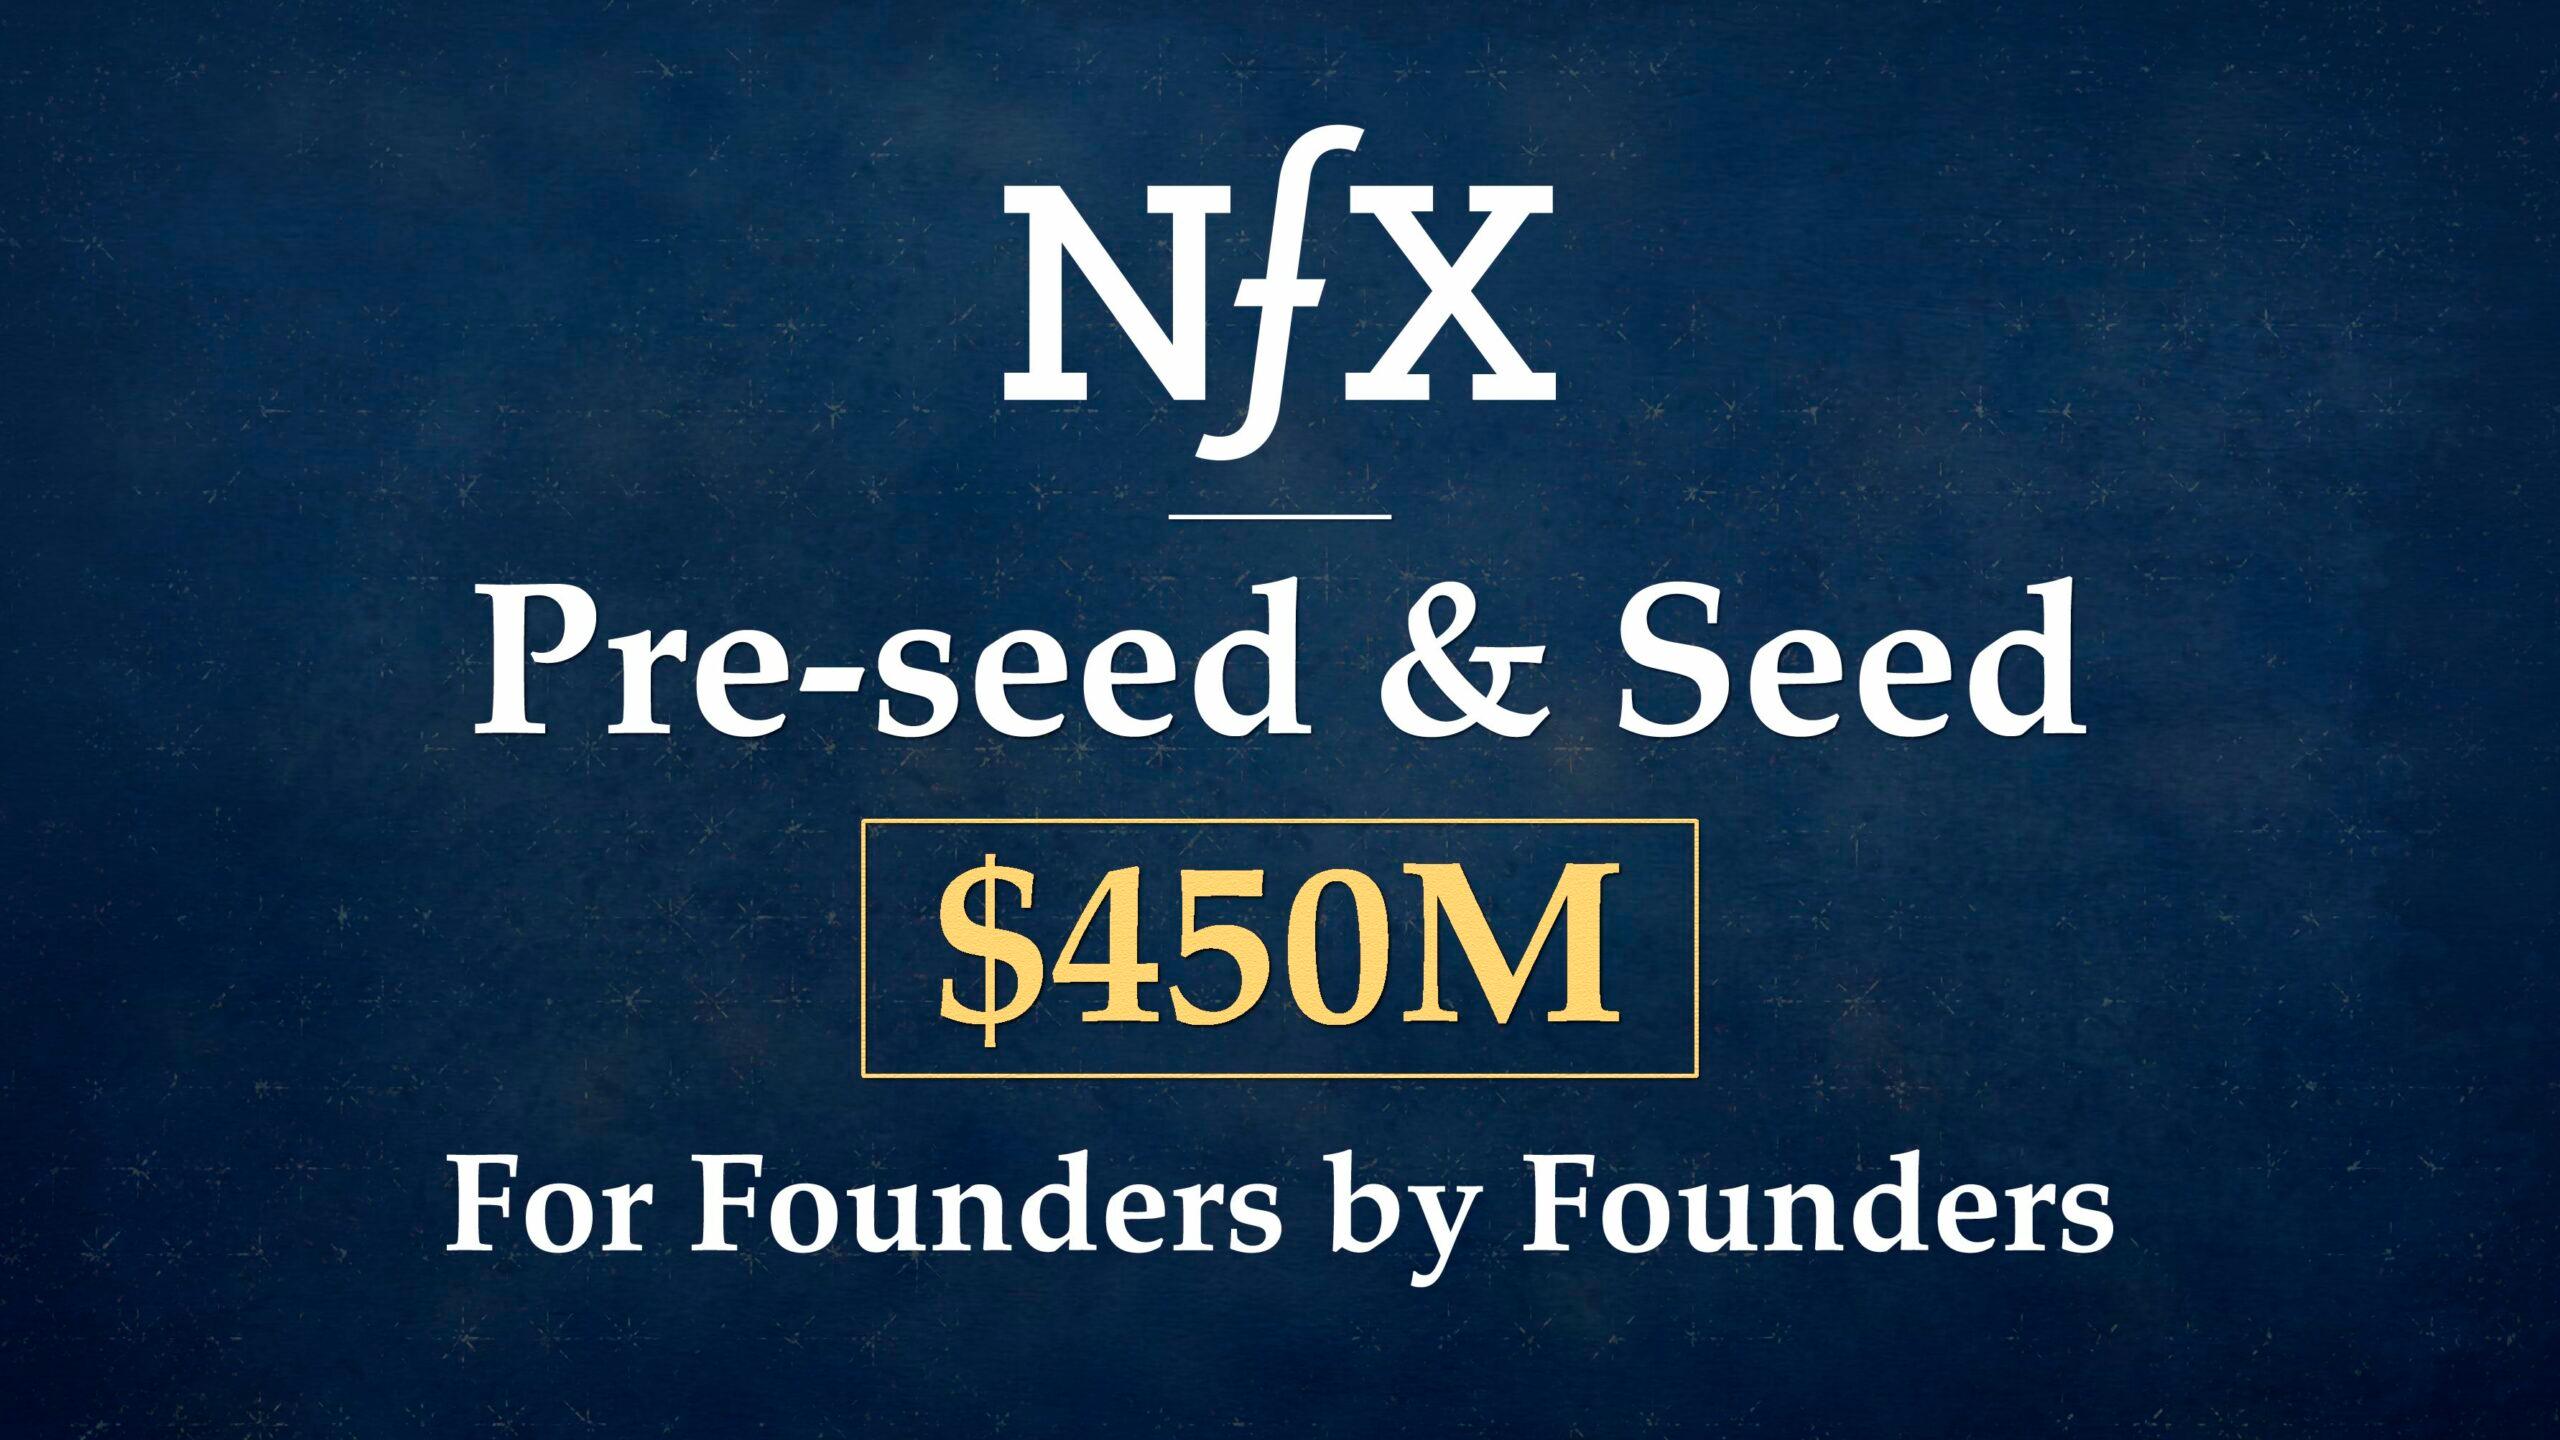 Fund III NFX